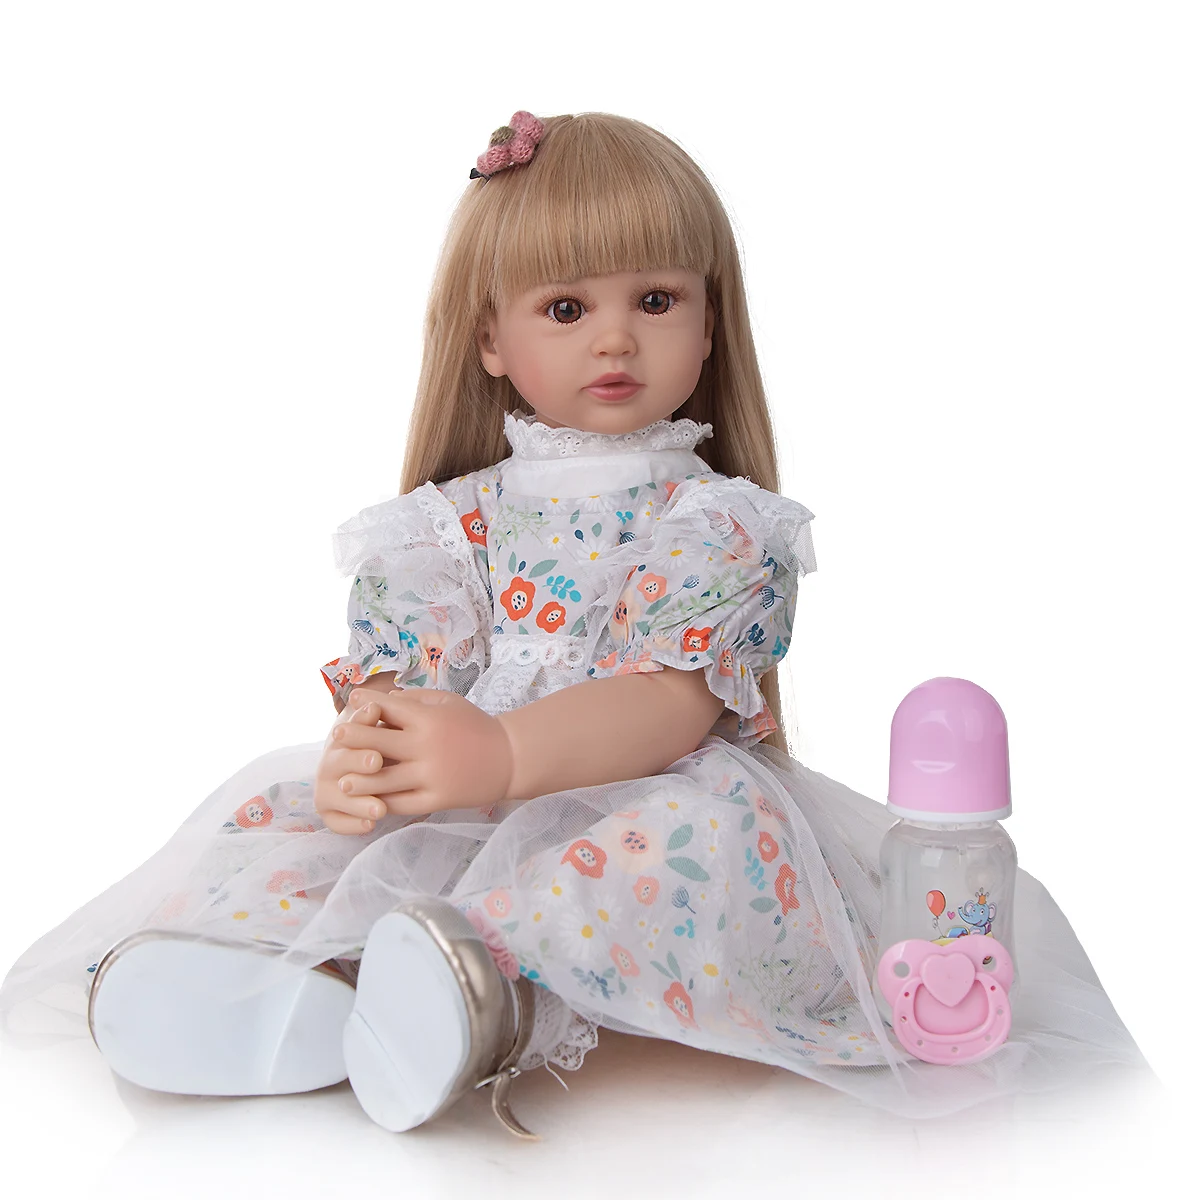 

60cm Huge reborn toddler princess Doll Handmade Silicone vinyl adorable Lifelike Bonecas girl kid bebe reborn menina